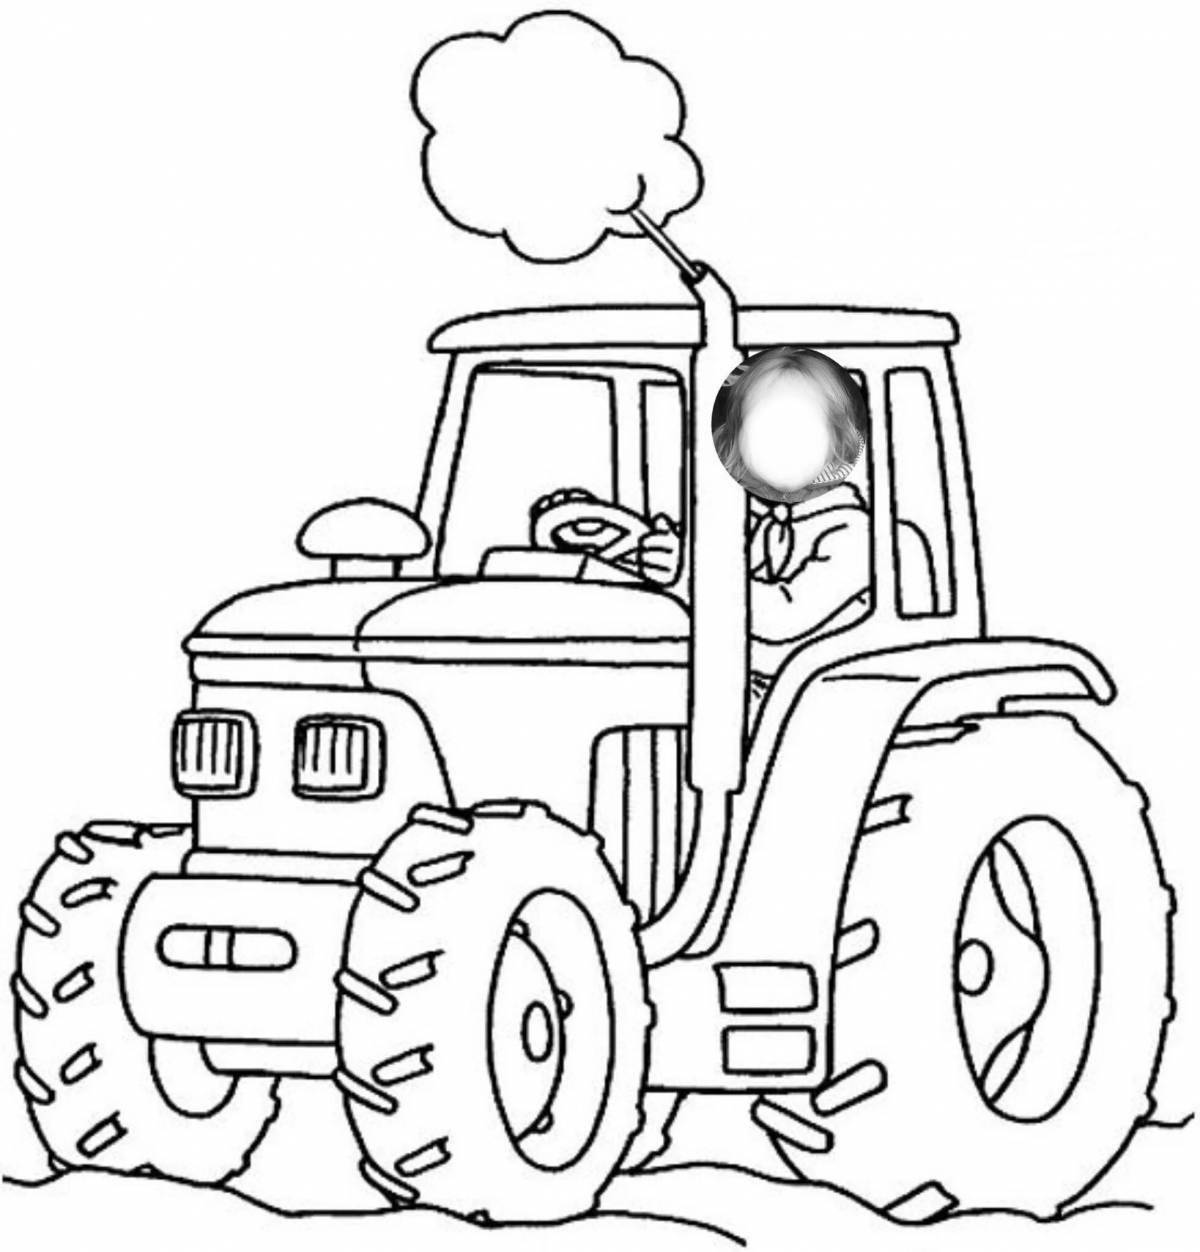 Coloring page happy tractor